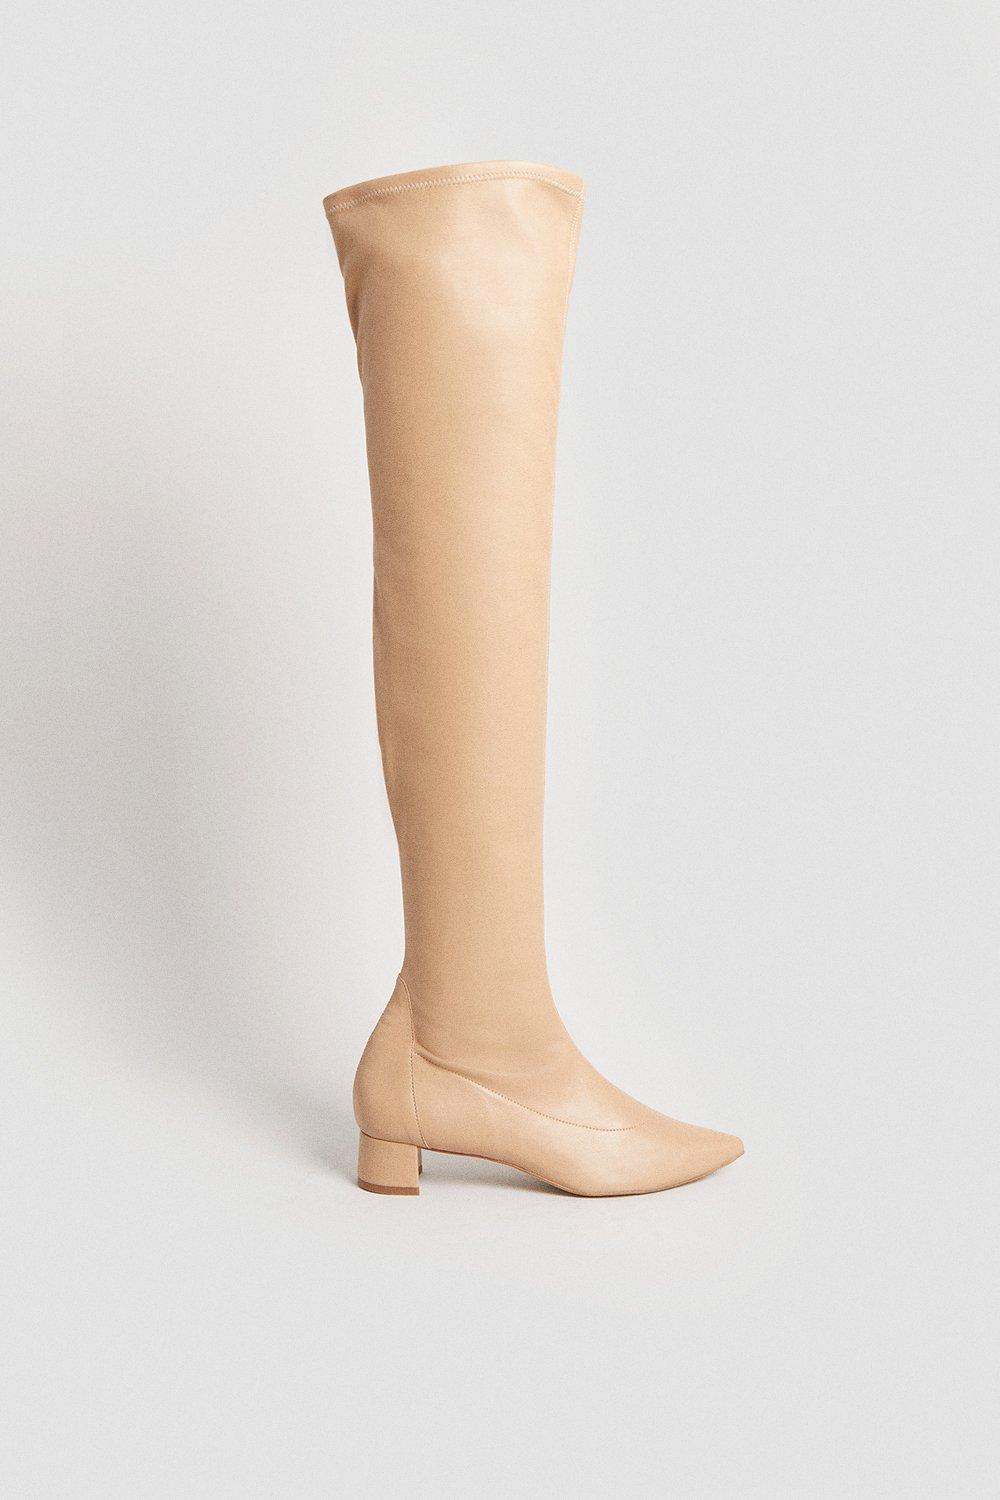 karen millen stretch over the knee pointed boot -, camel